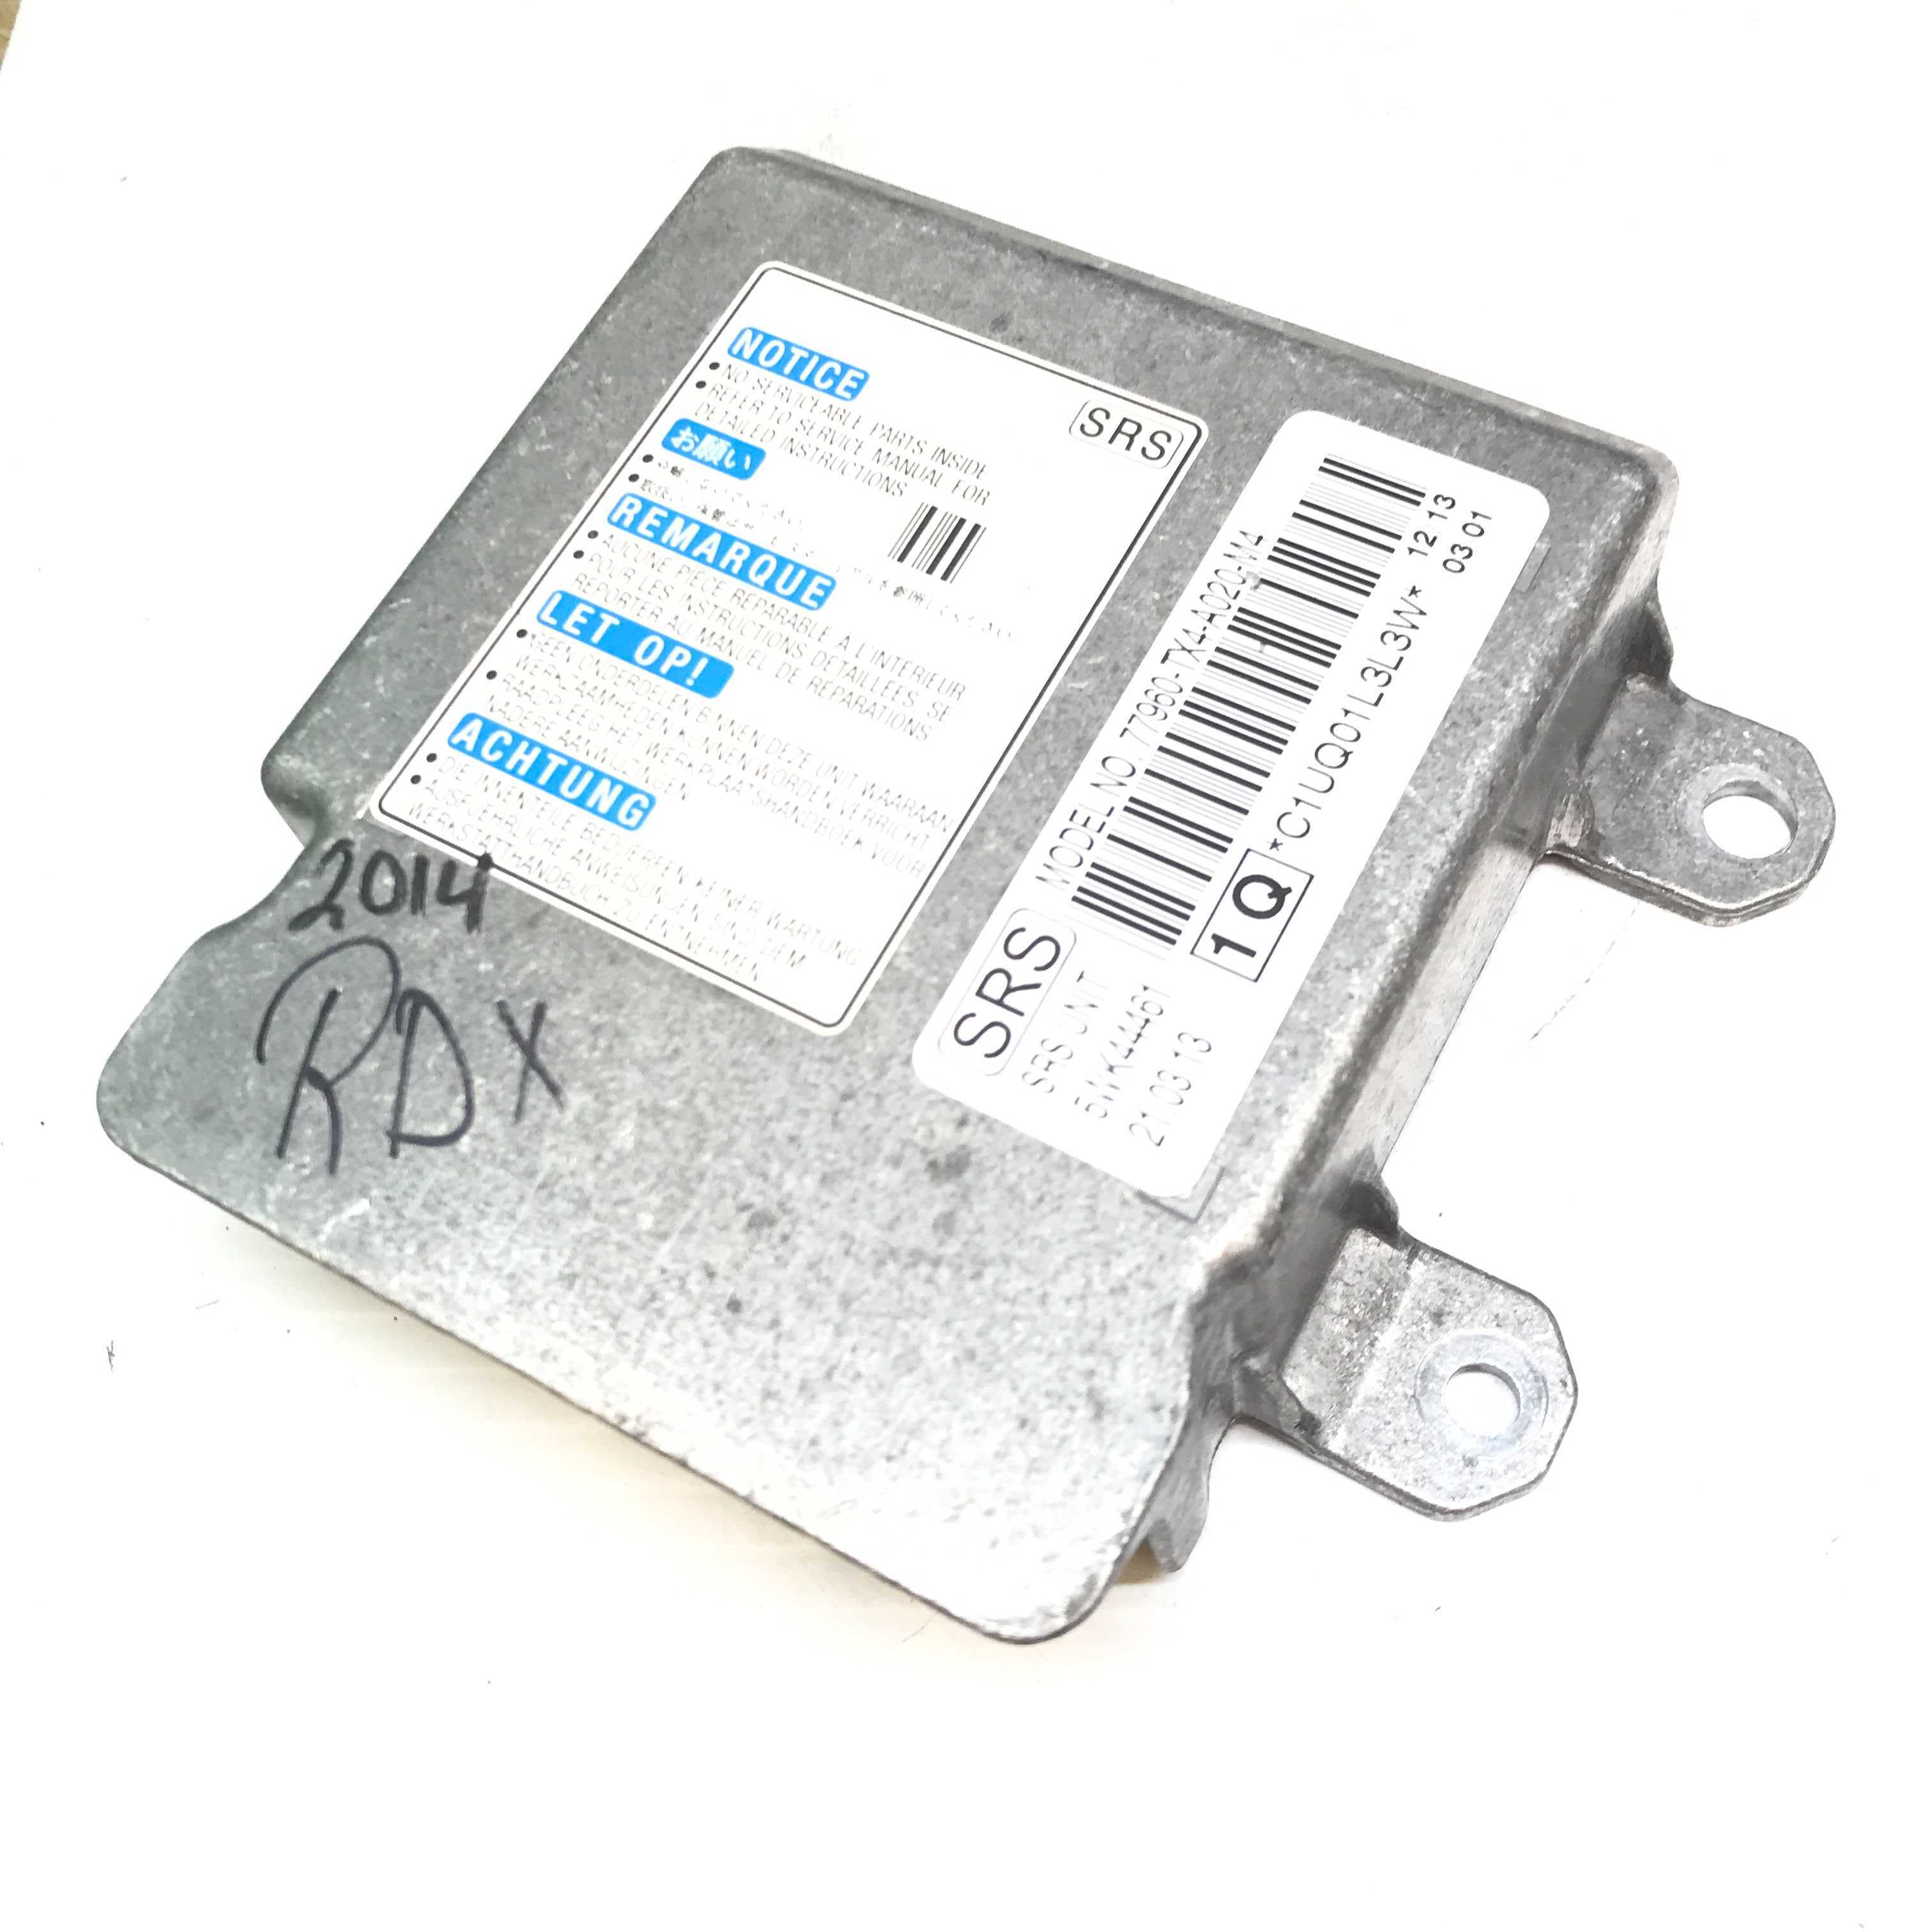 ACURA RDX SRS Airbag Computer Diagnostic Control Module PART #77960TX4A020M4